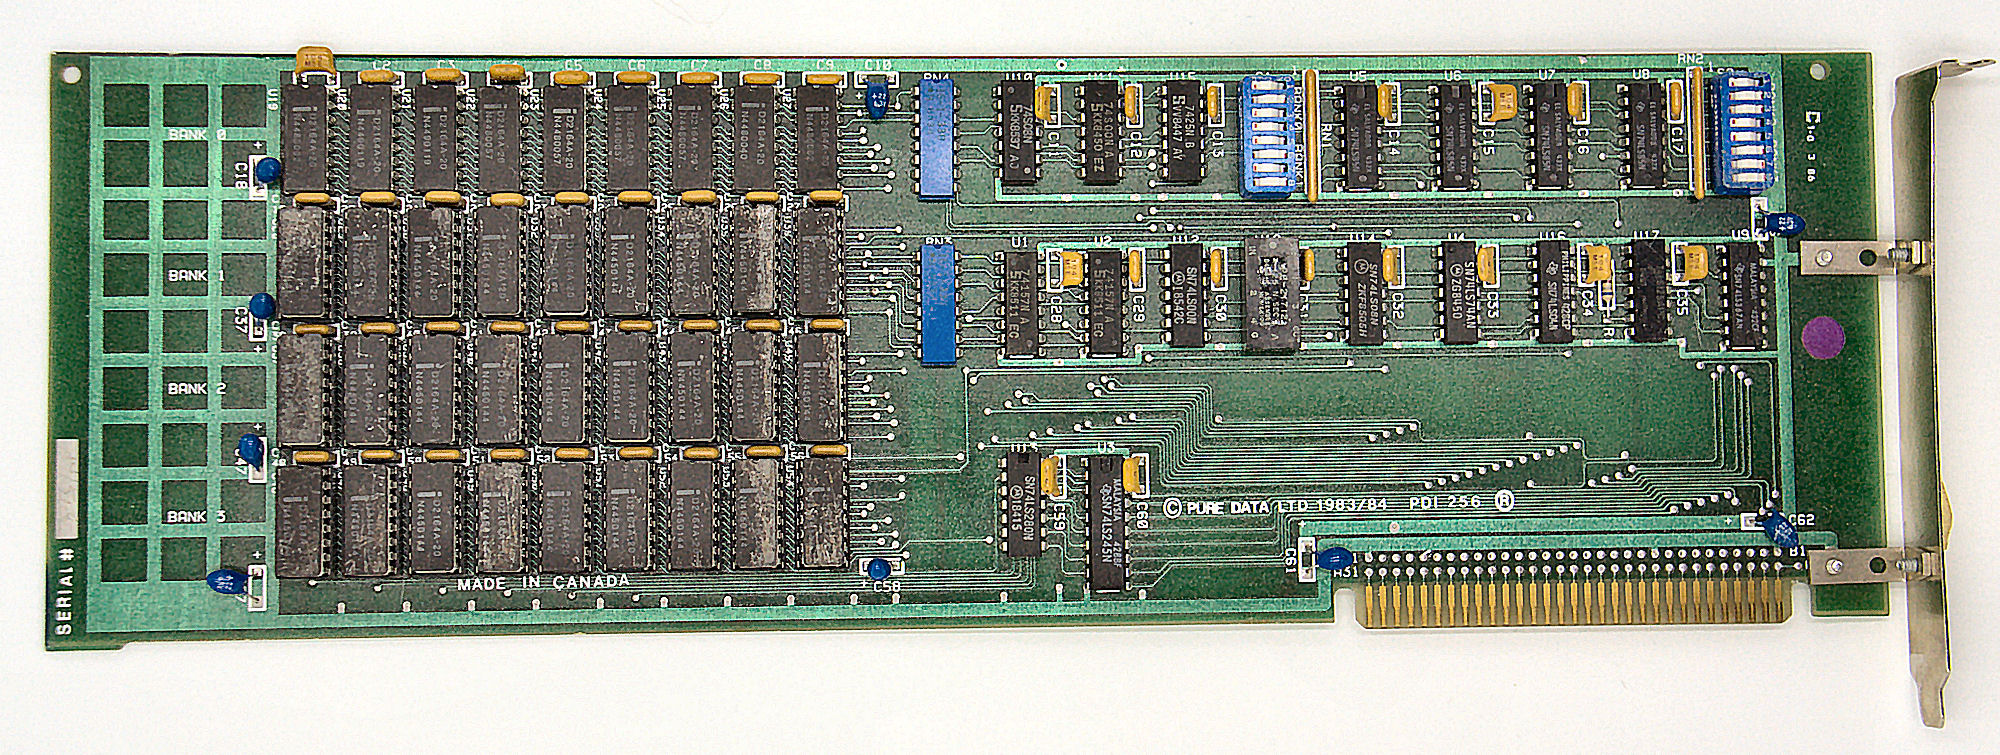 Pure Data PDI-256 8-bit ISA Memory card